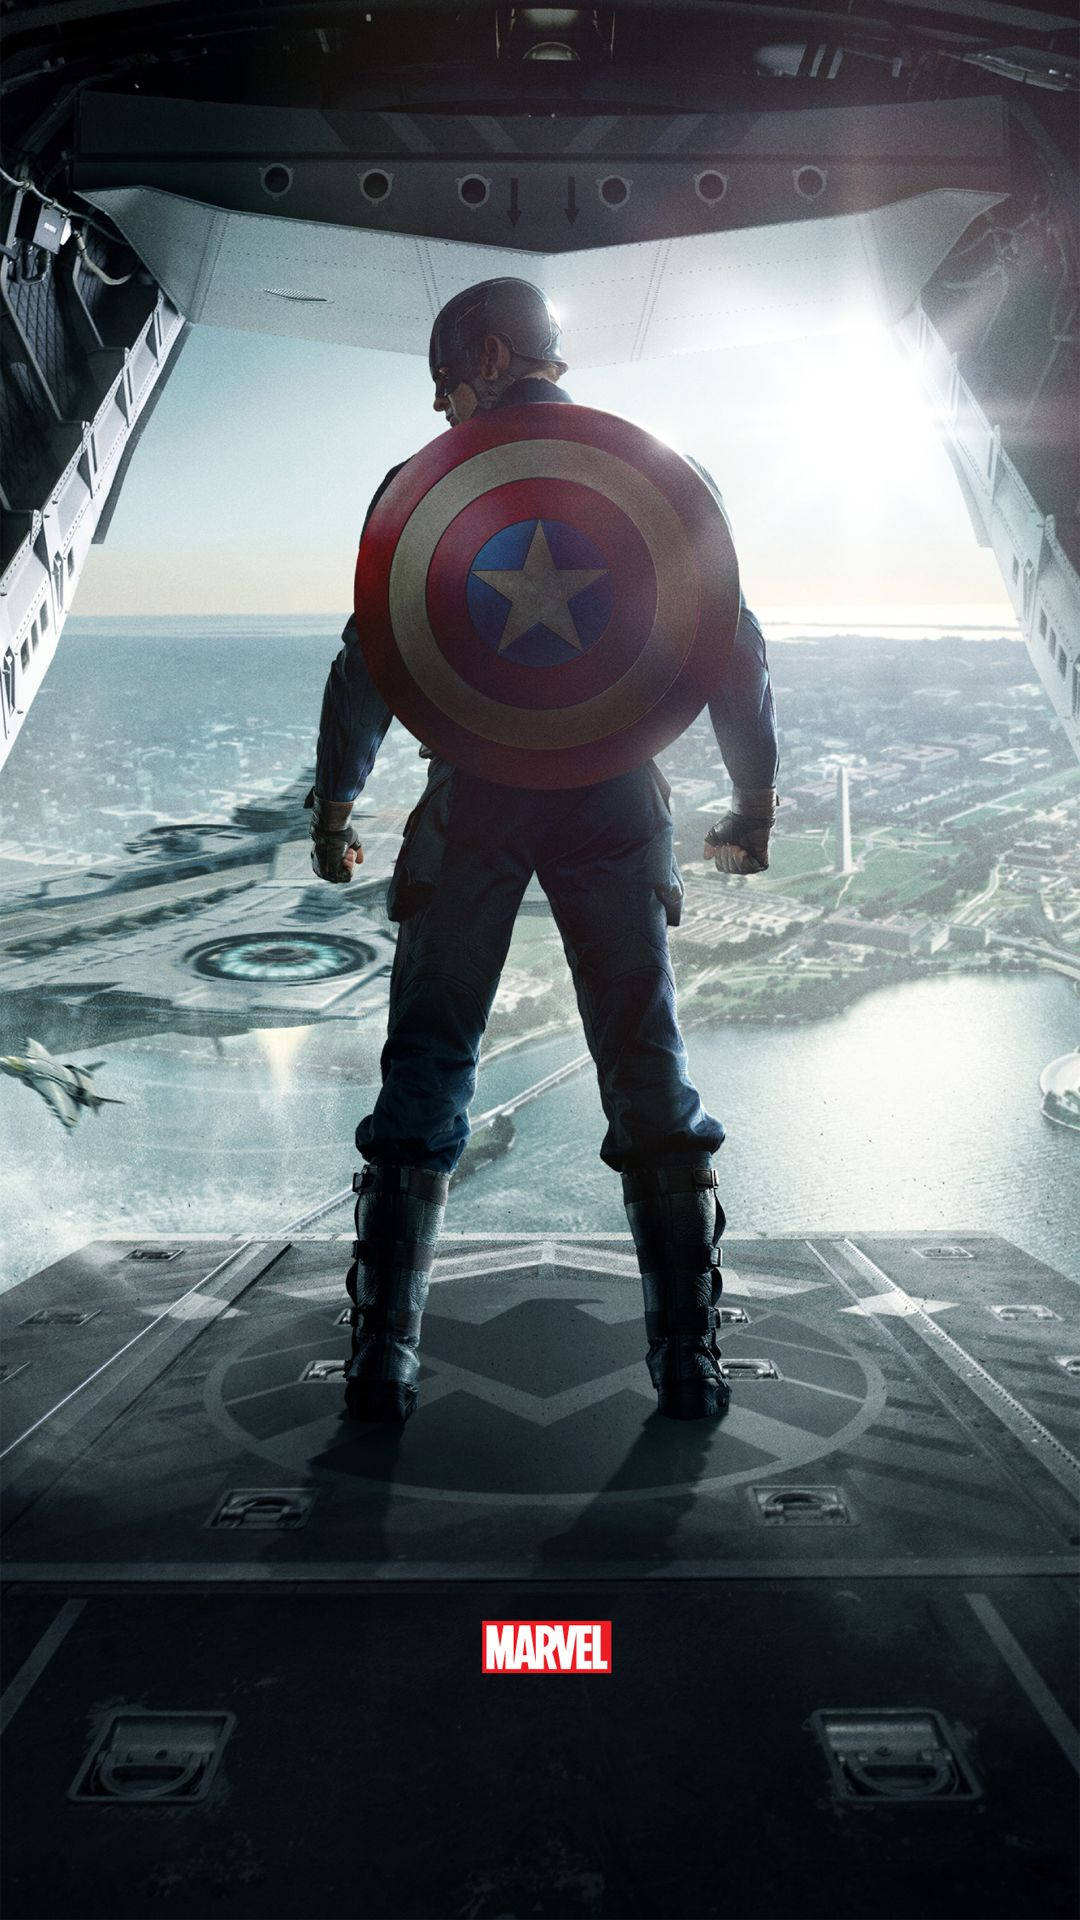 Captain America: The Winter Soldier Wallpaper